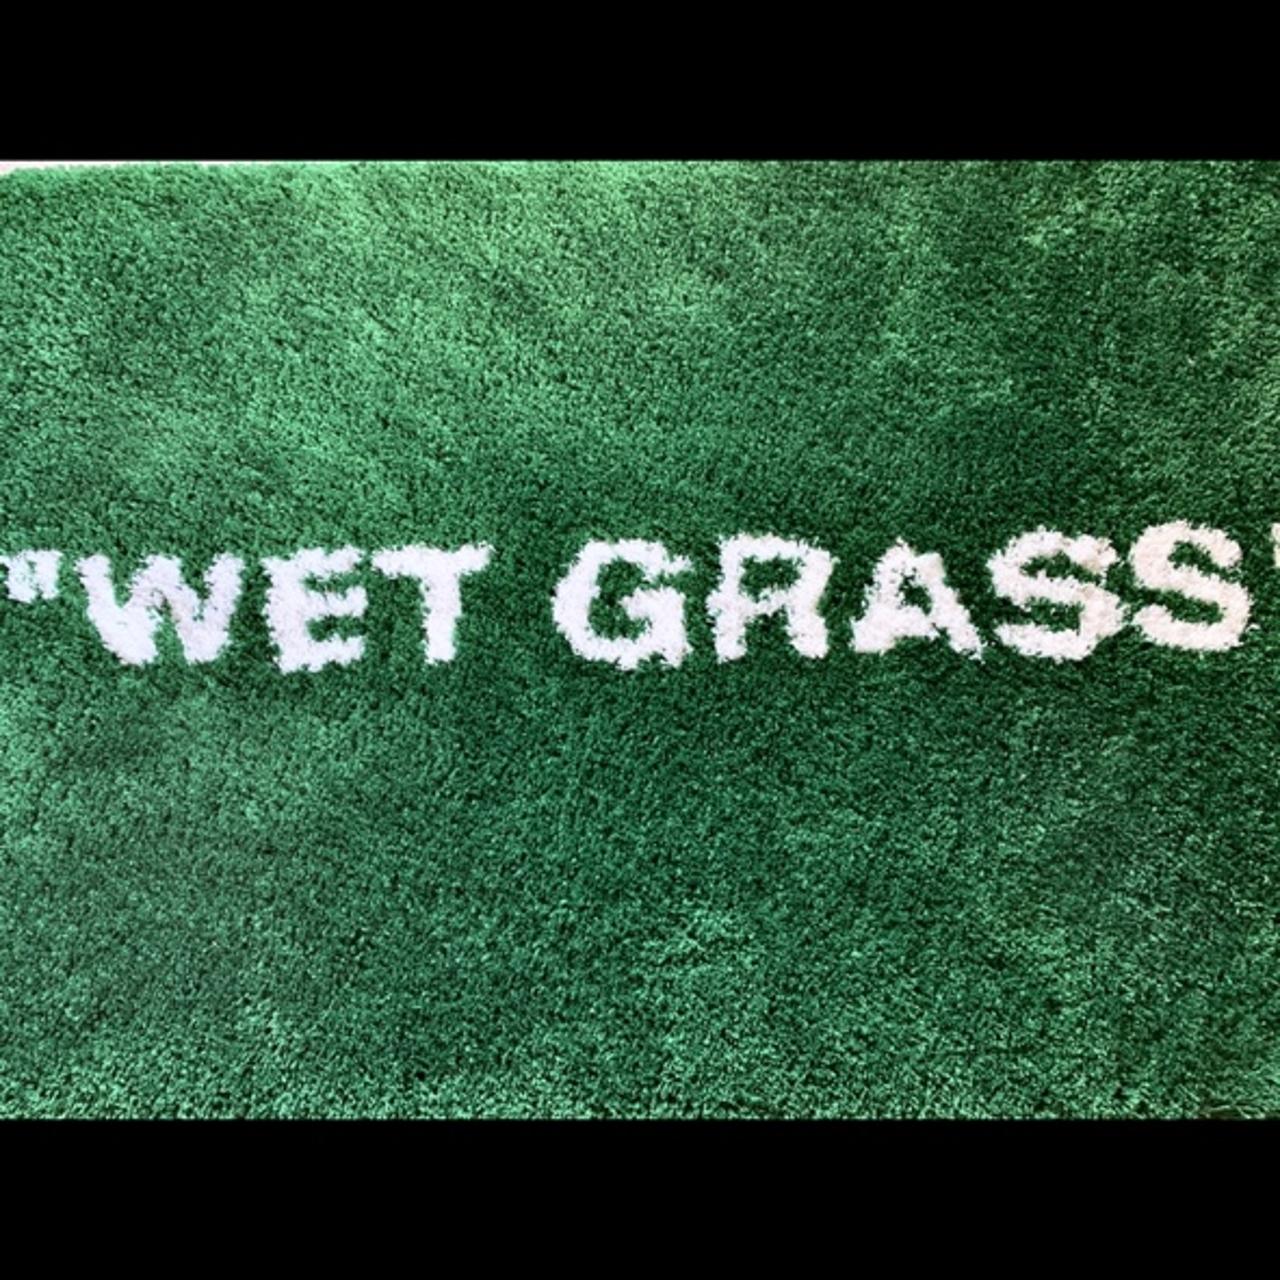 Interest check “WET GRASS” green and white rug Ikea - Depop